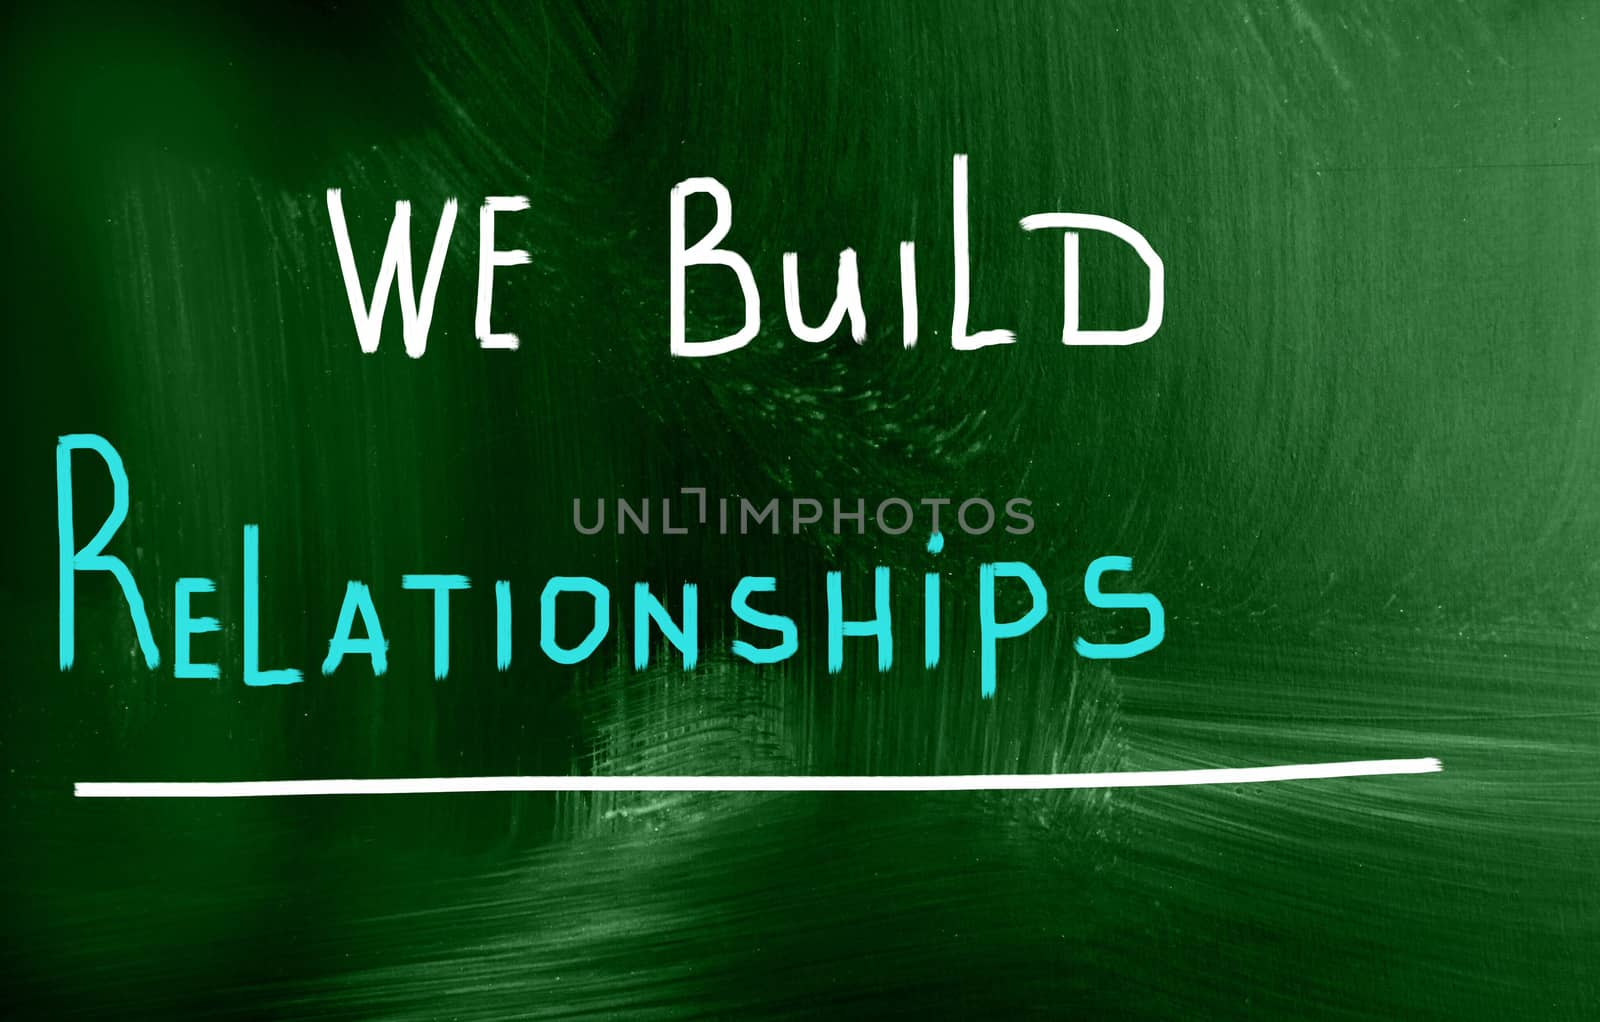 we build relationships by nenov